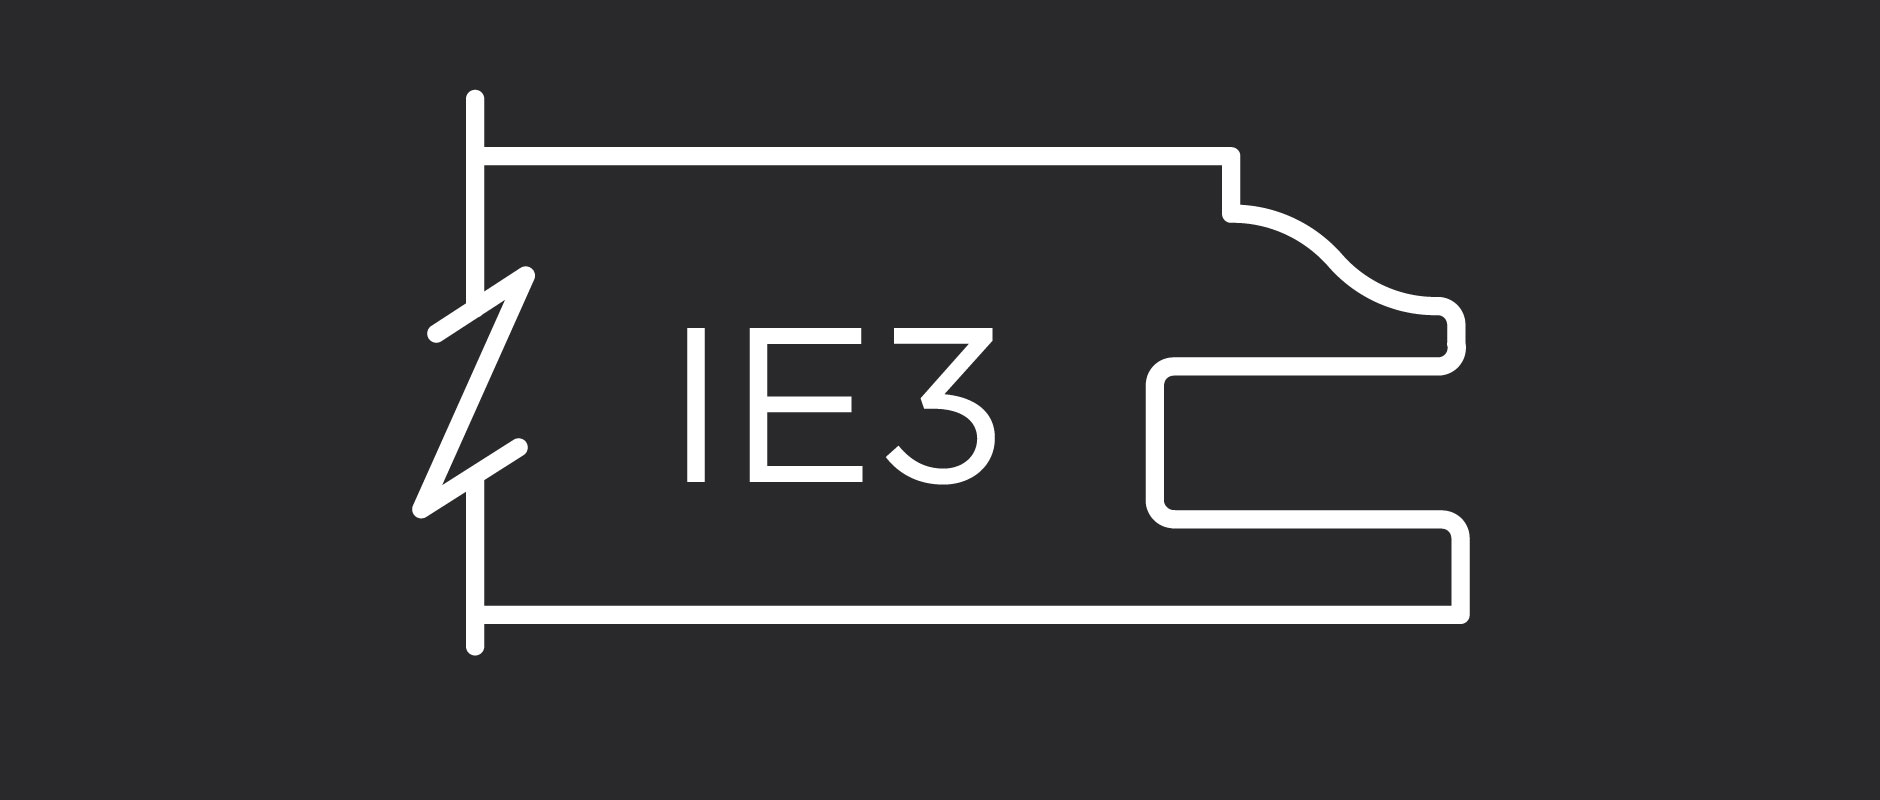 IE3 Inside Edge Profile